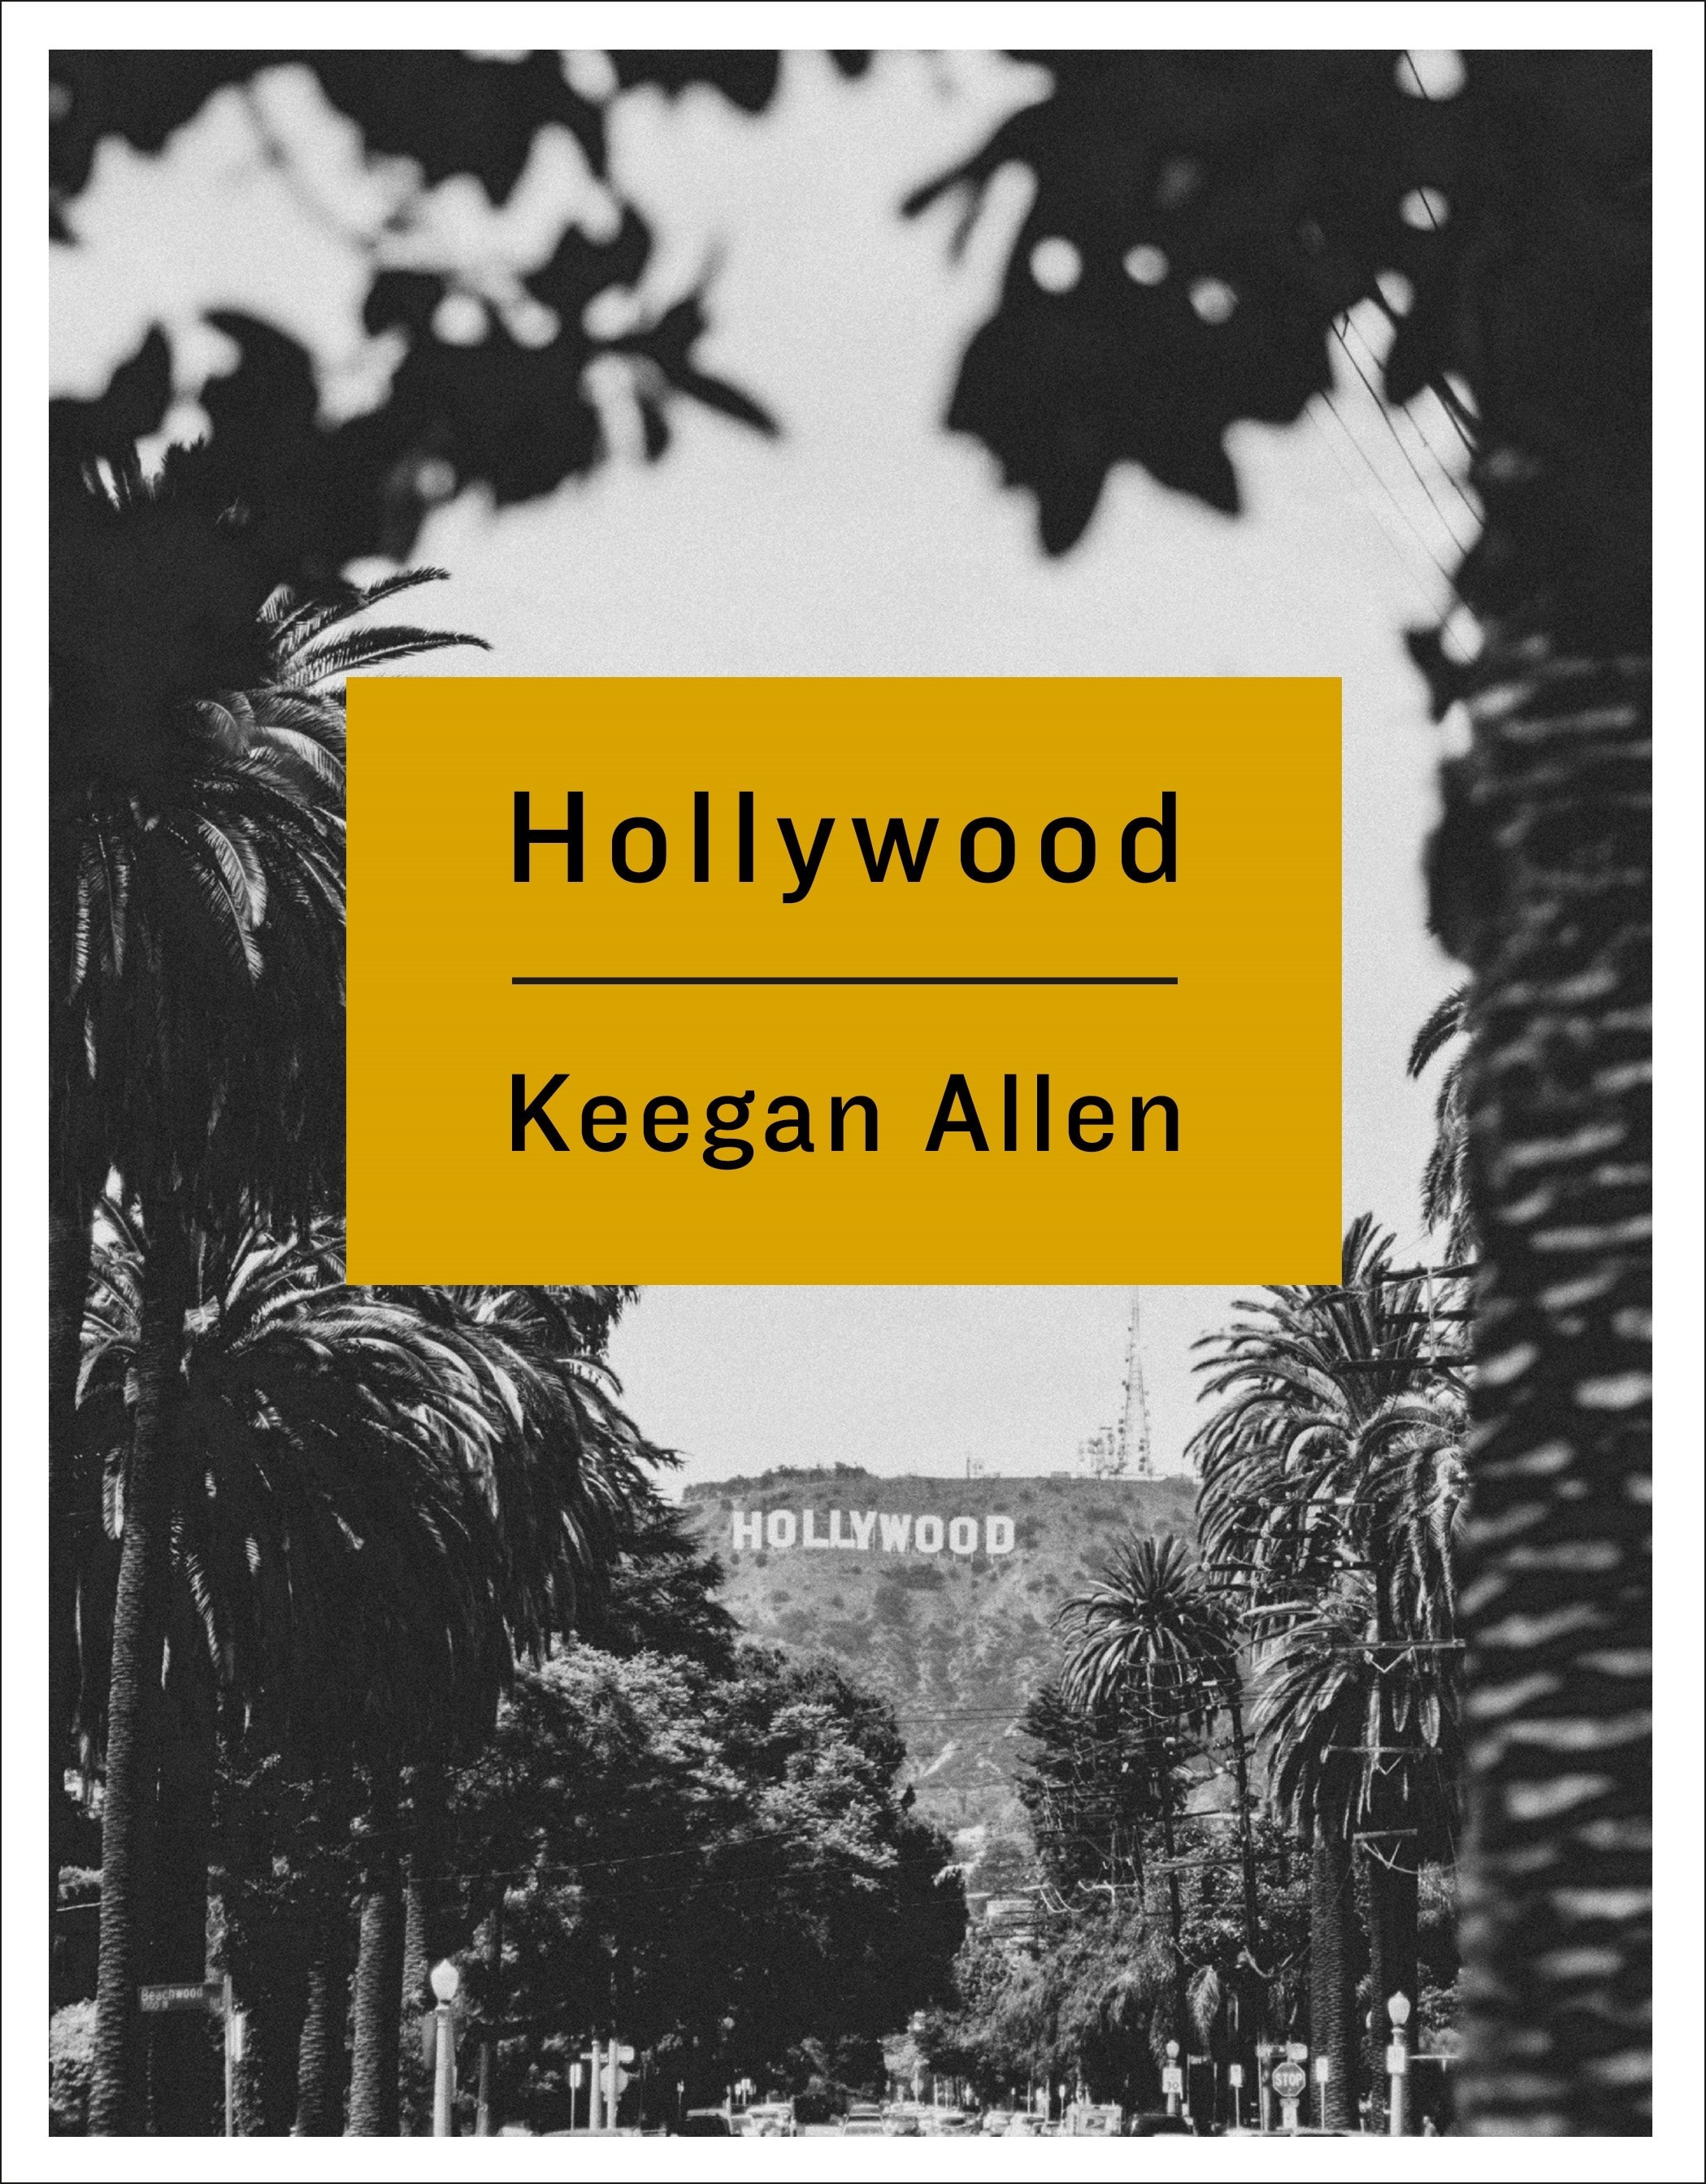 Book “Hollywood” by Keegan Allen — April 24, 2018